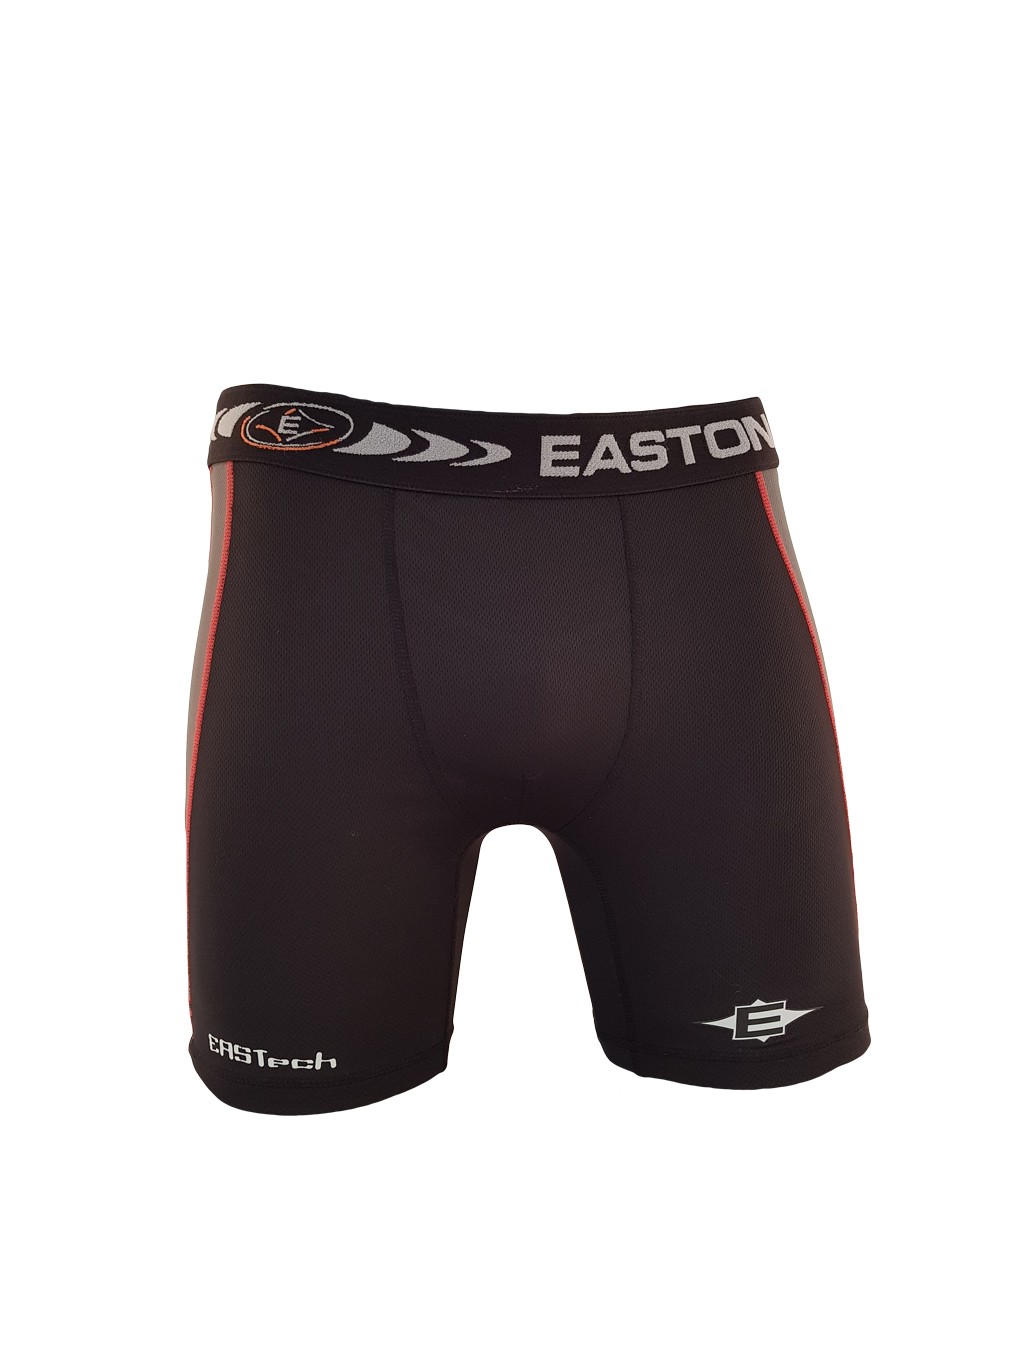 Easton Eastech Compression Junior Underwear Pants